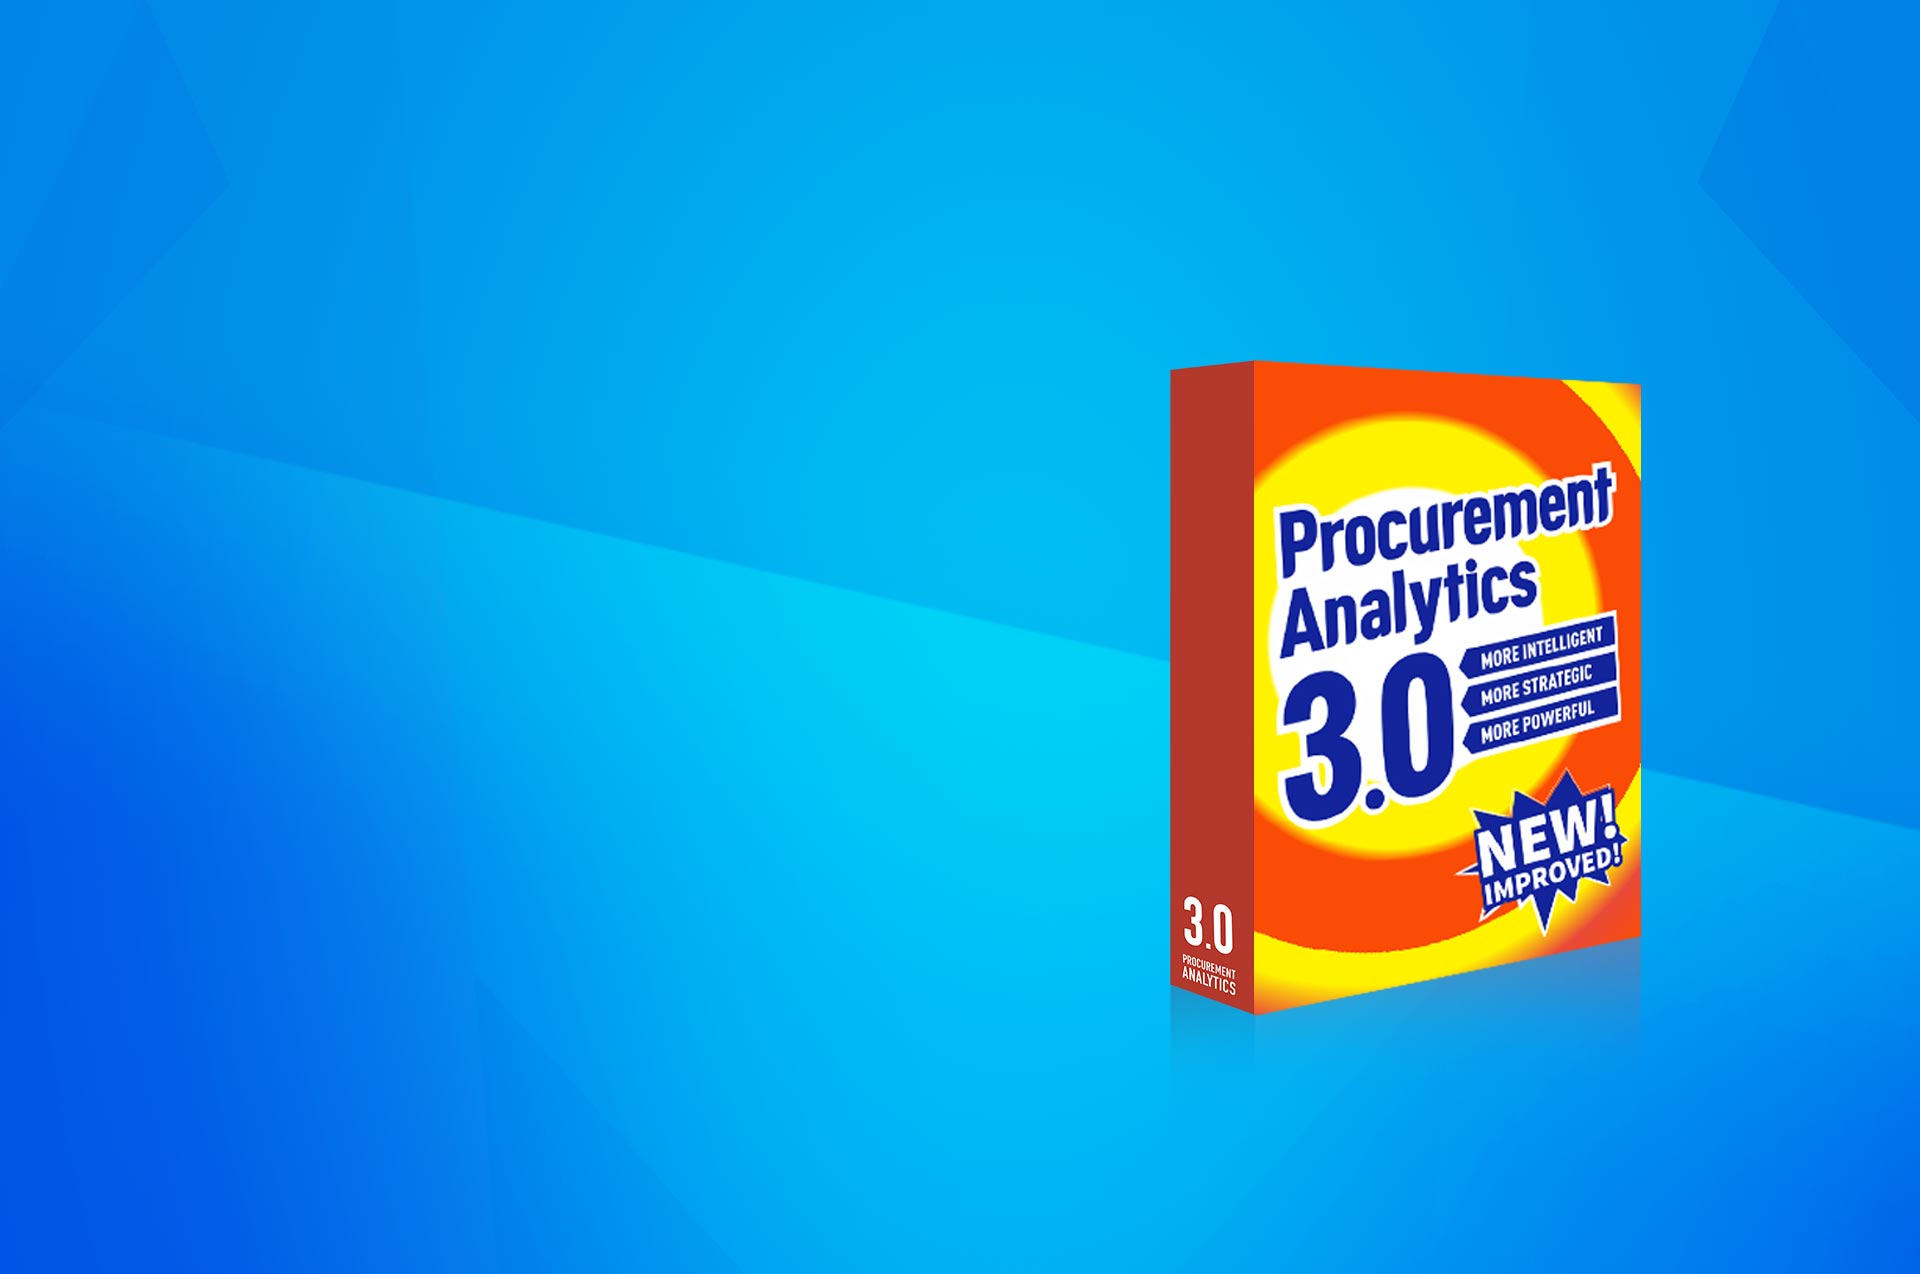 Procurement Analytics 3.0